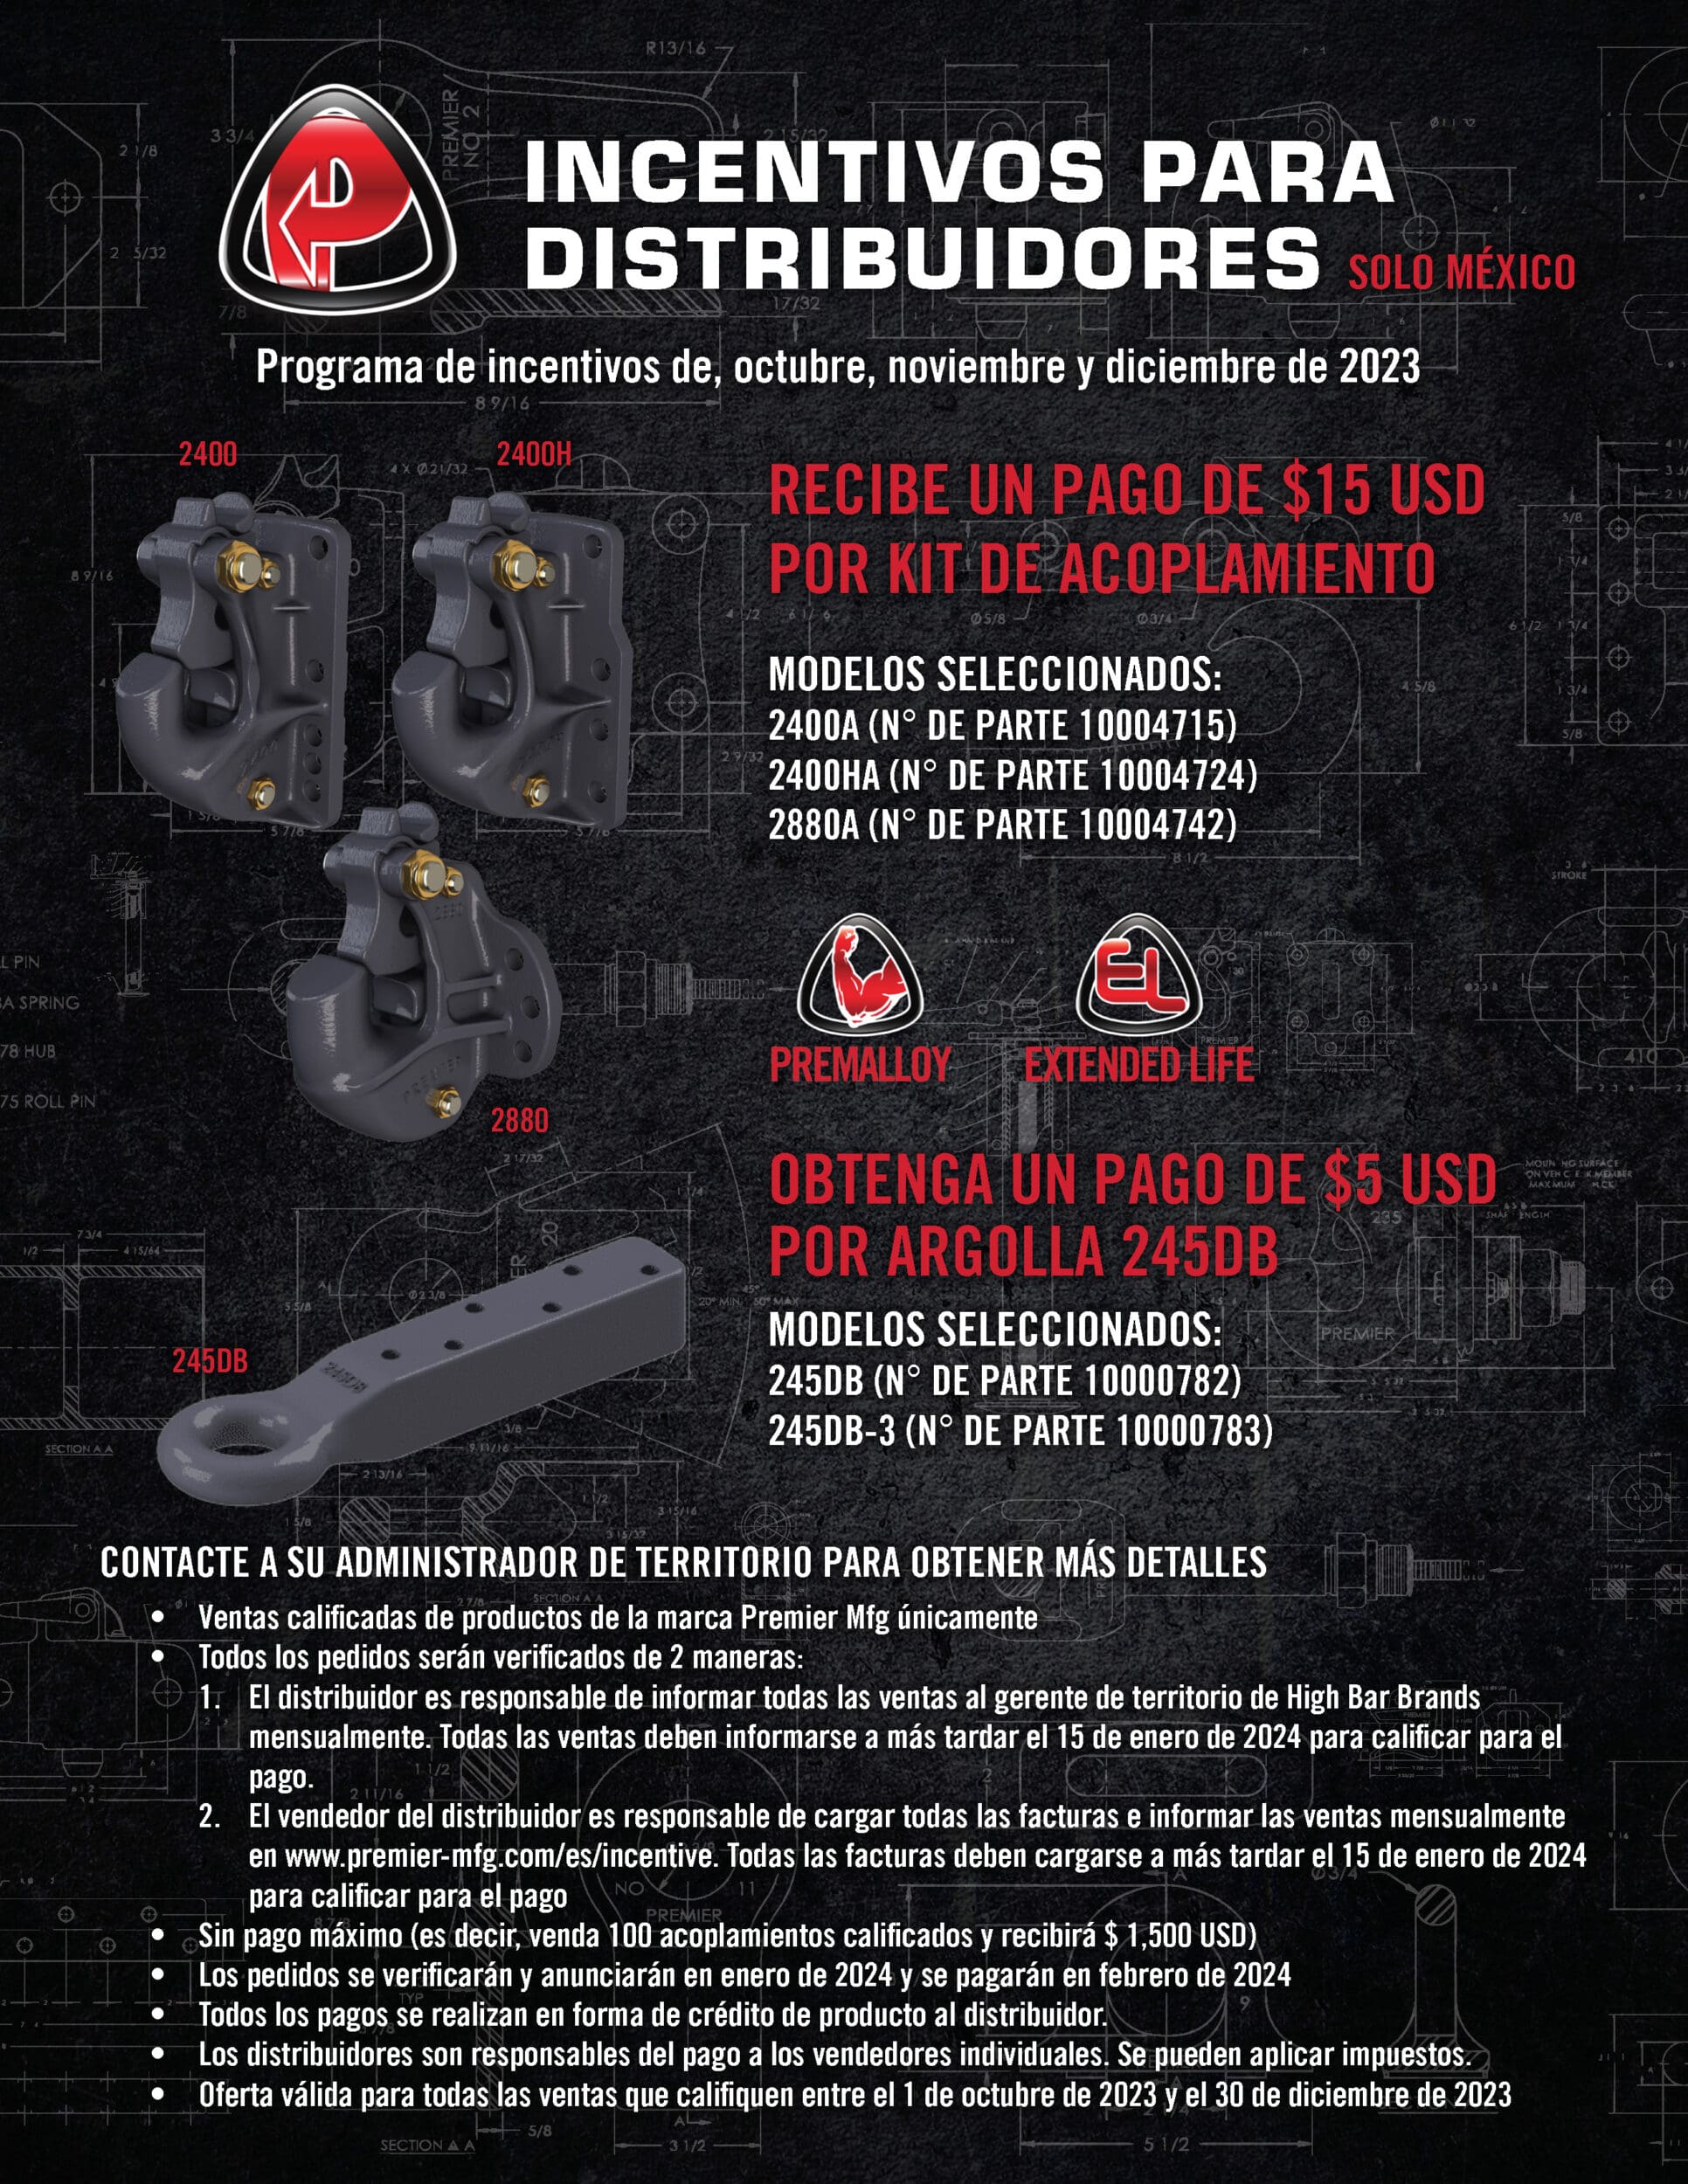 Spanish Distributor Incentive Flyer